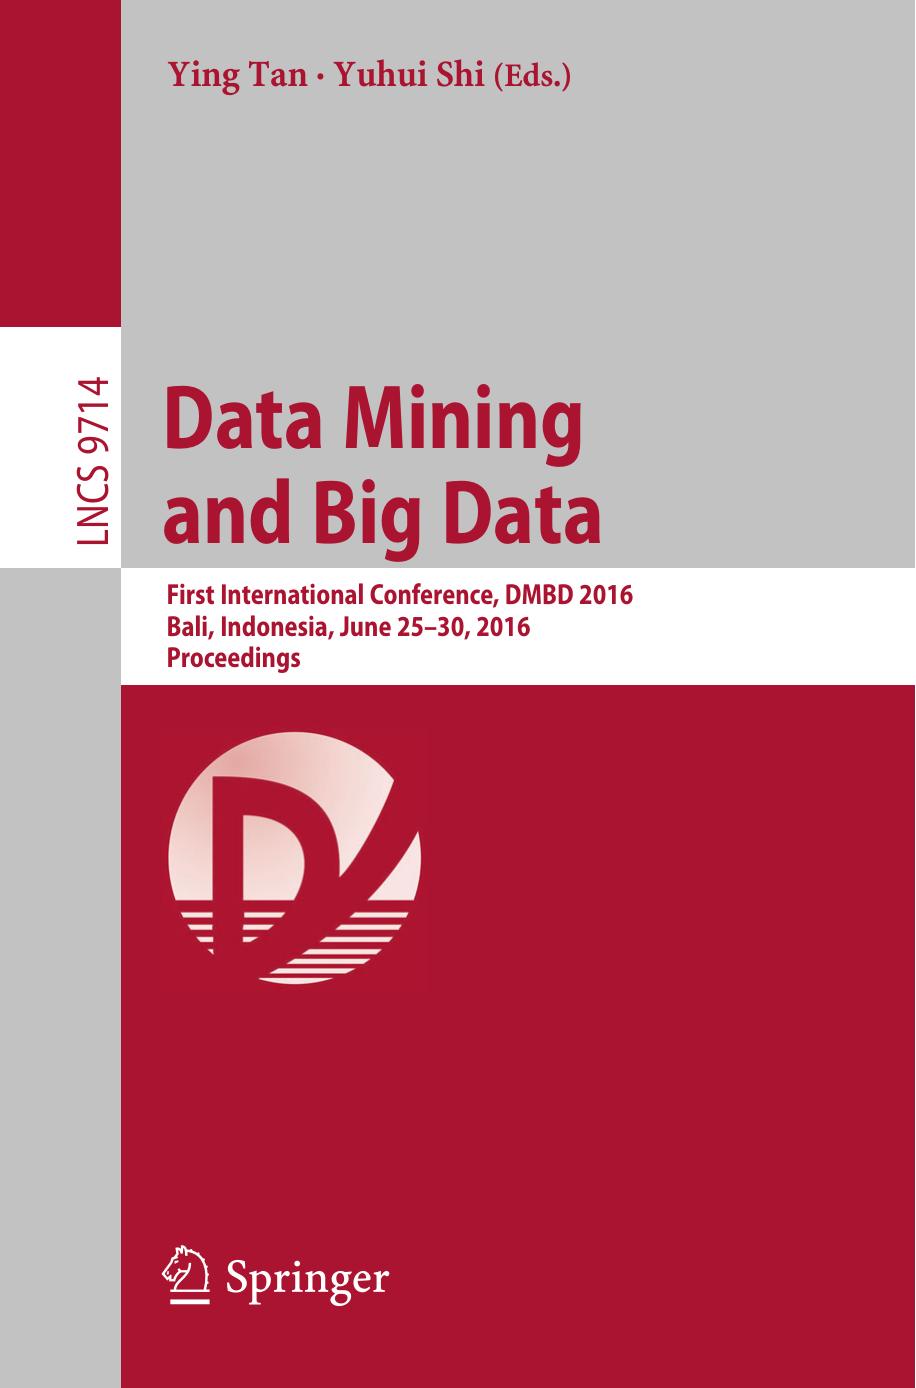 Data Mining and Big Data 2016